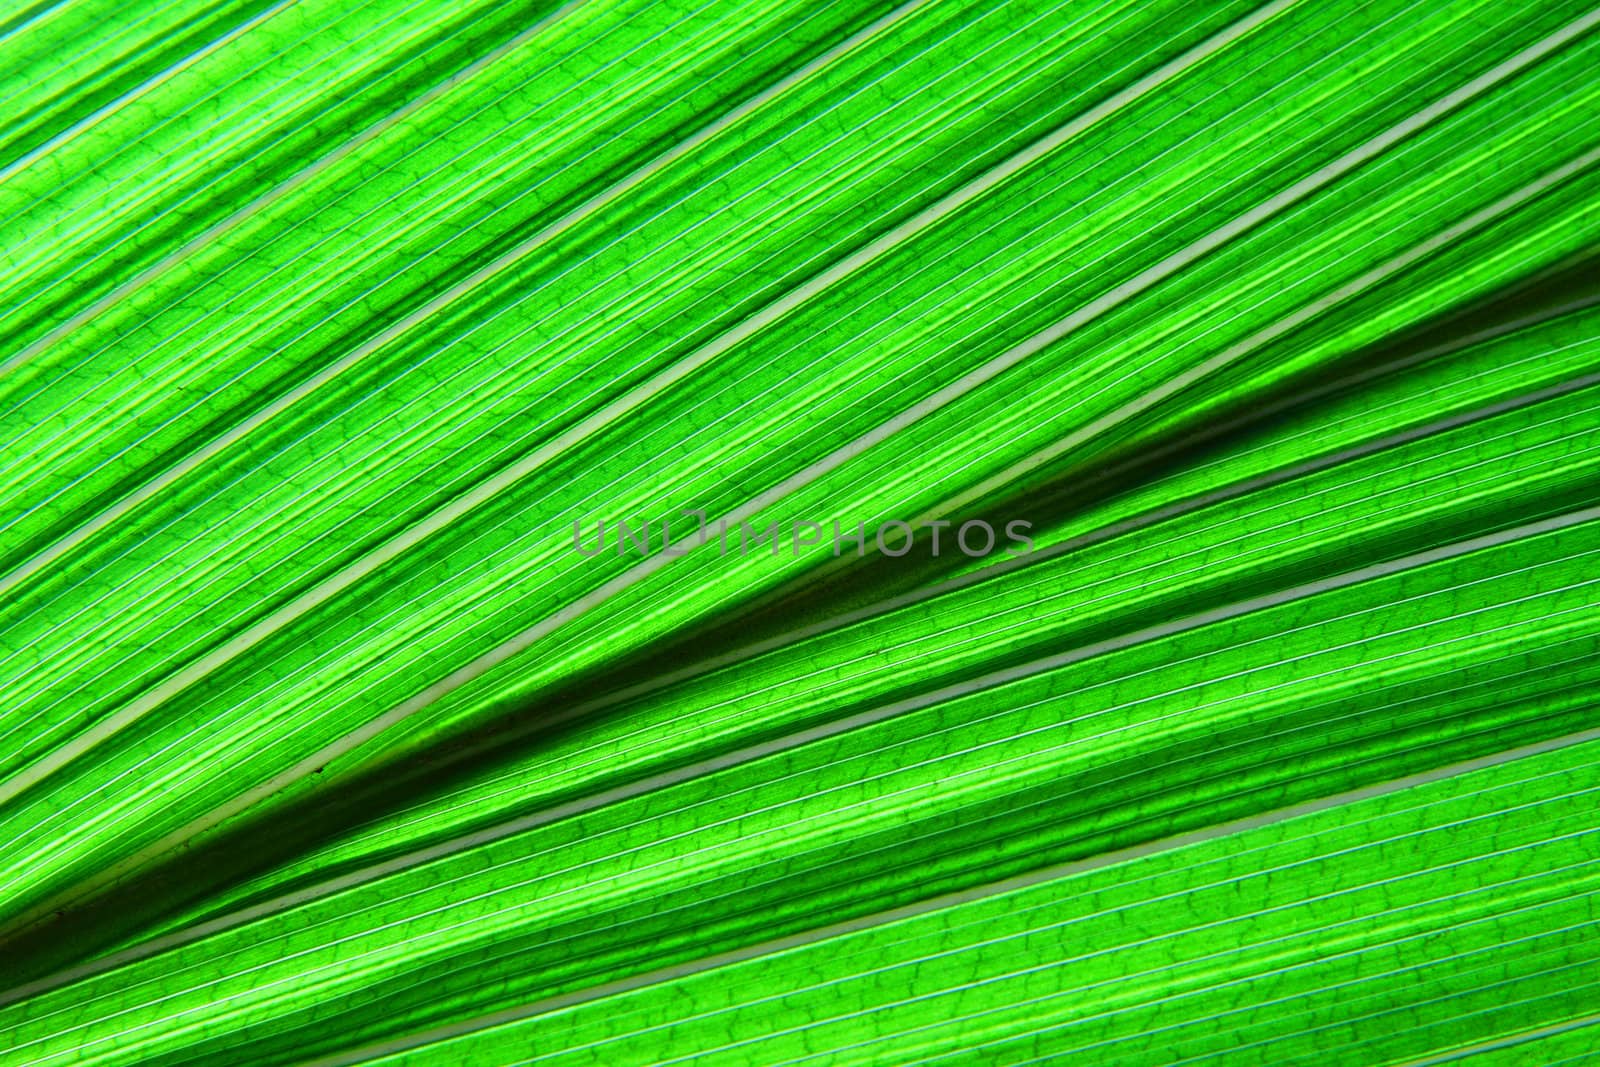 green leaf texture by jonnysek